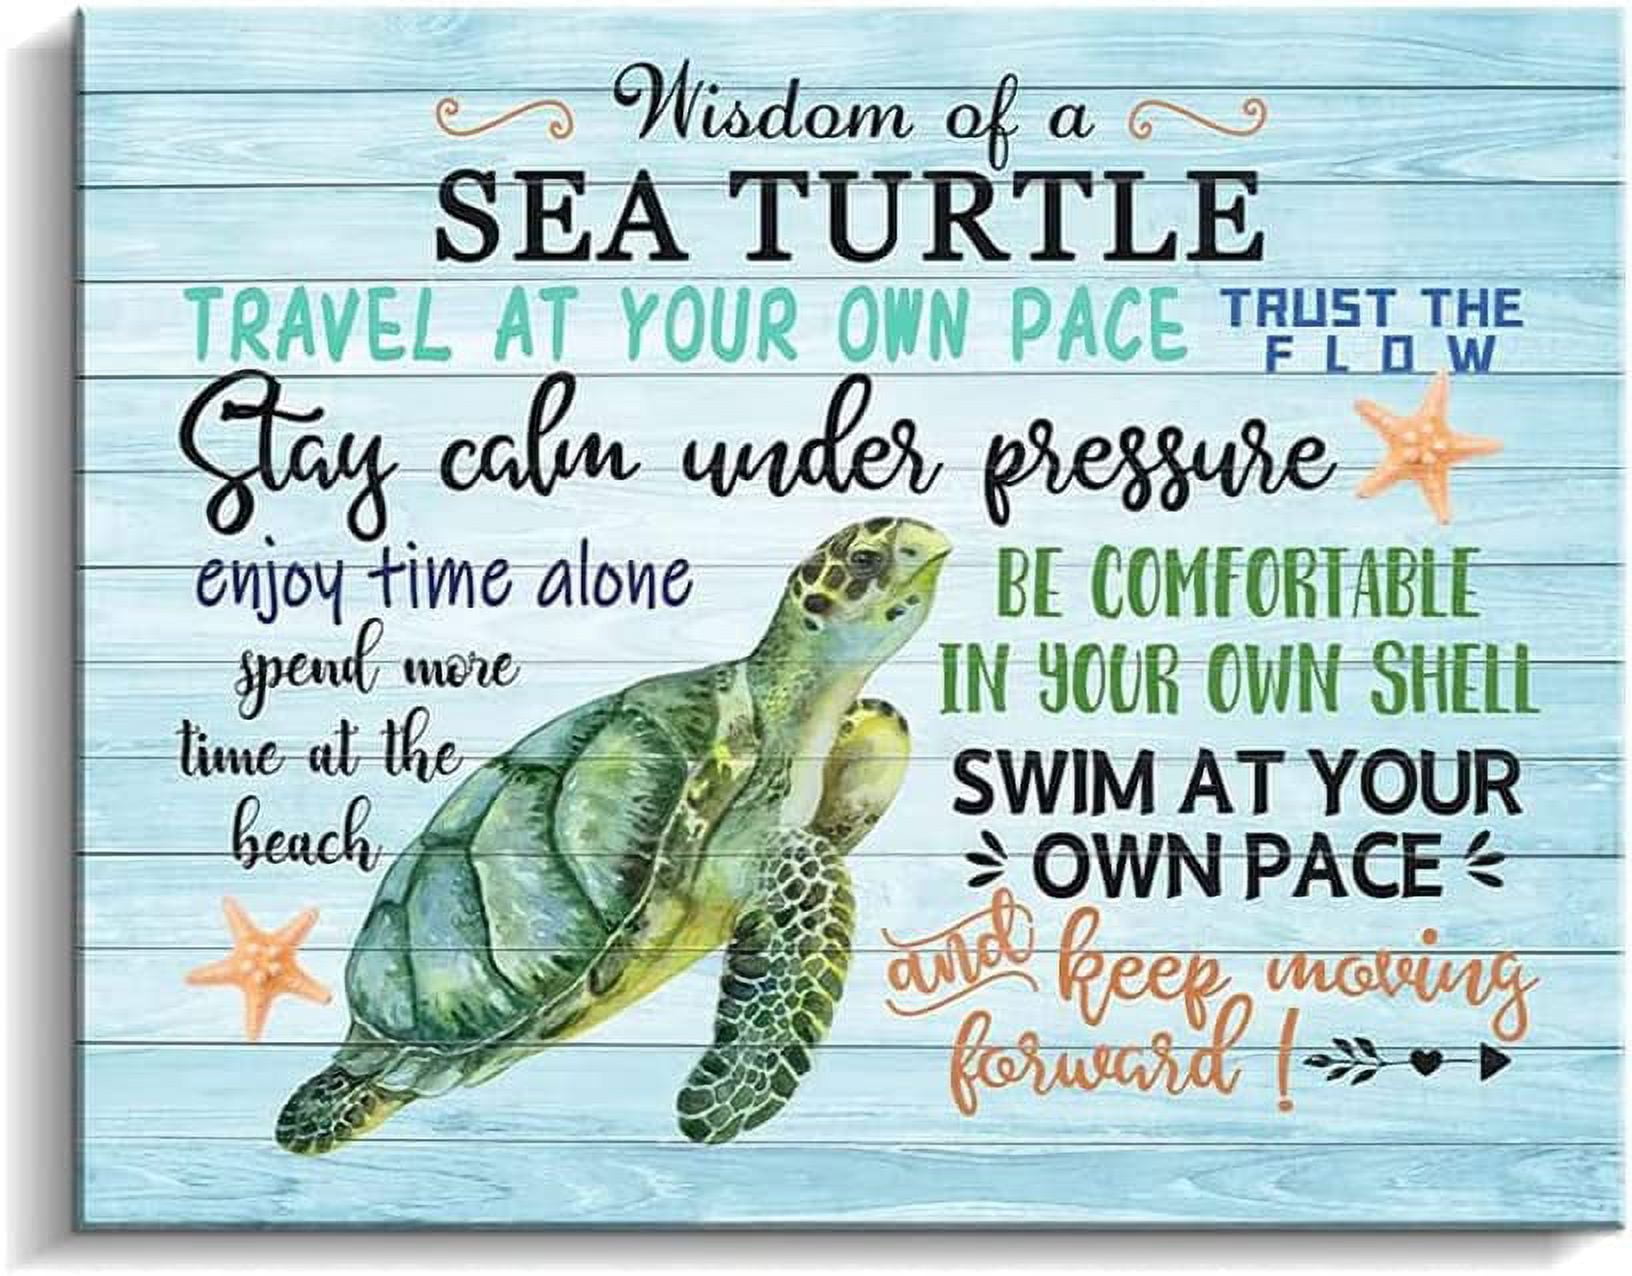 Framed Sea Turtle Canvas Art Bathroom Wall Decor - Wisdom Sea Turtle  Inspirational Quotes Artwork for Home Decor, 12x15 Inches… 